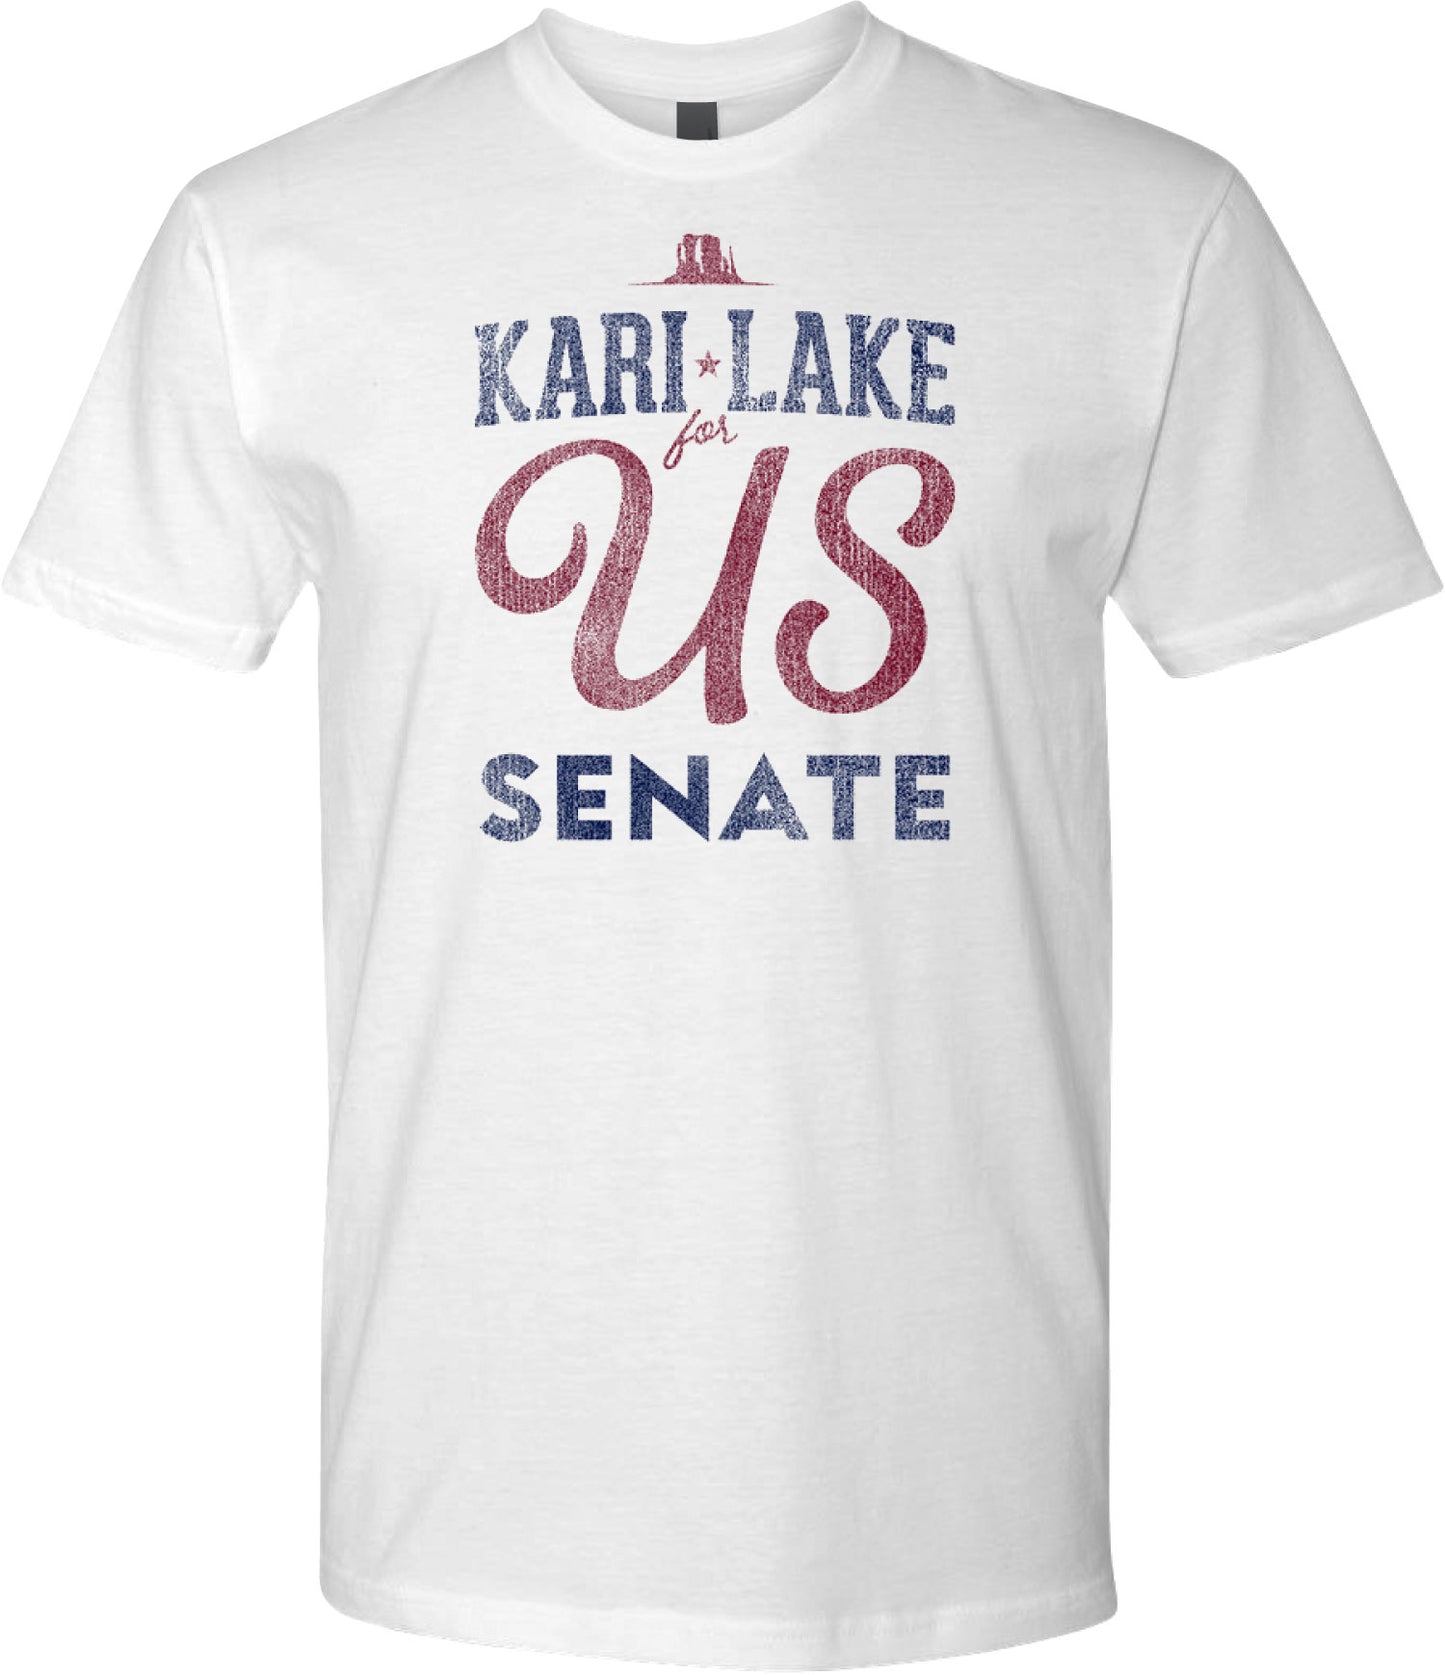 Kari Lake for US: T-Shirt (White)